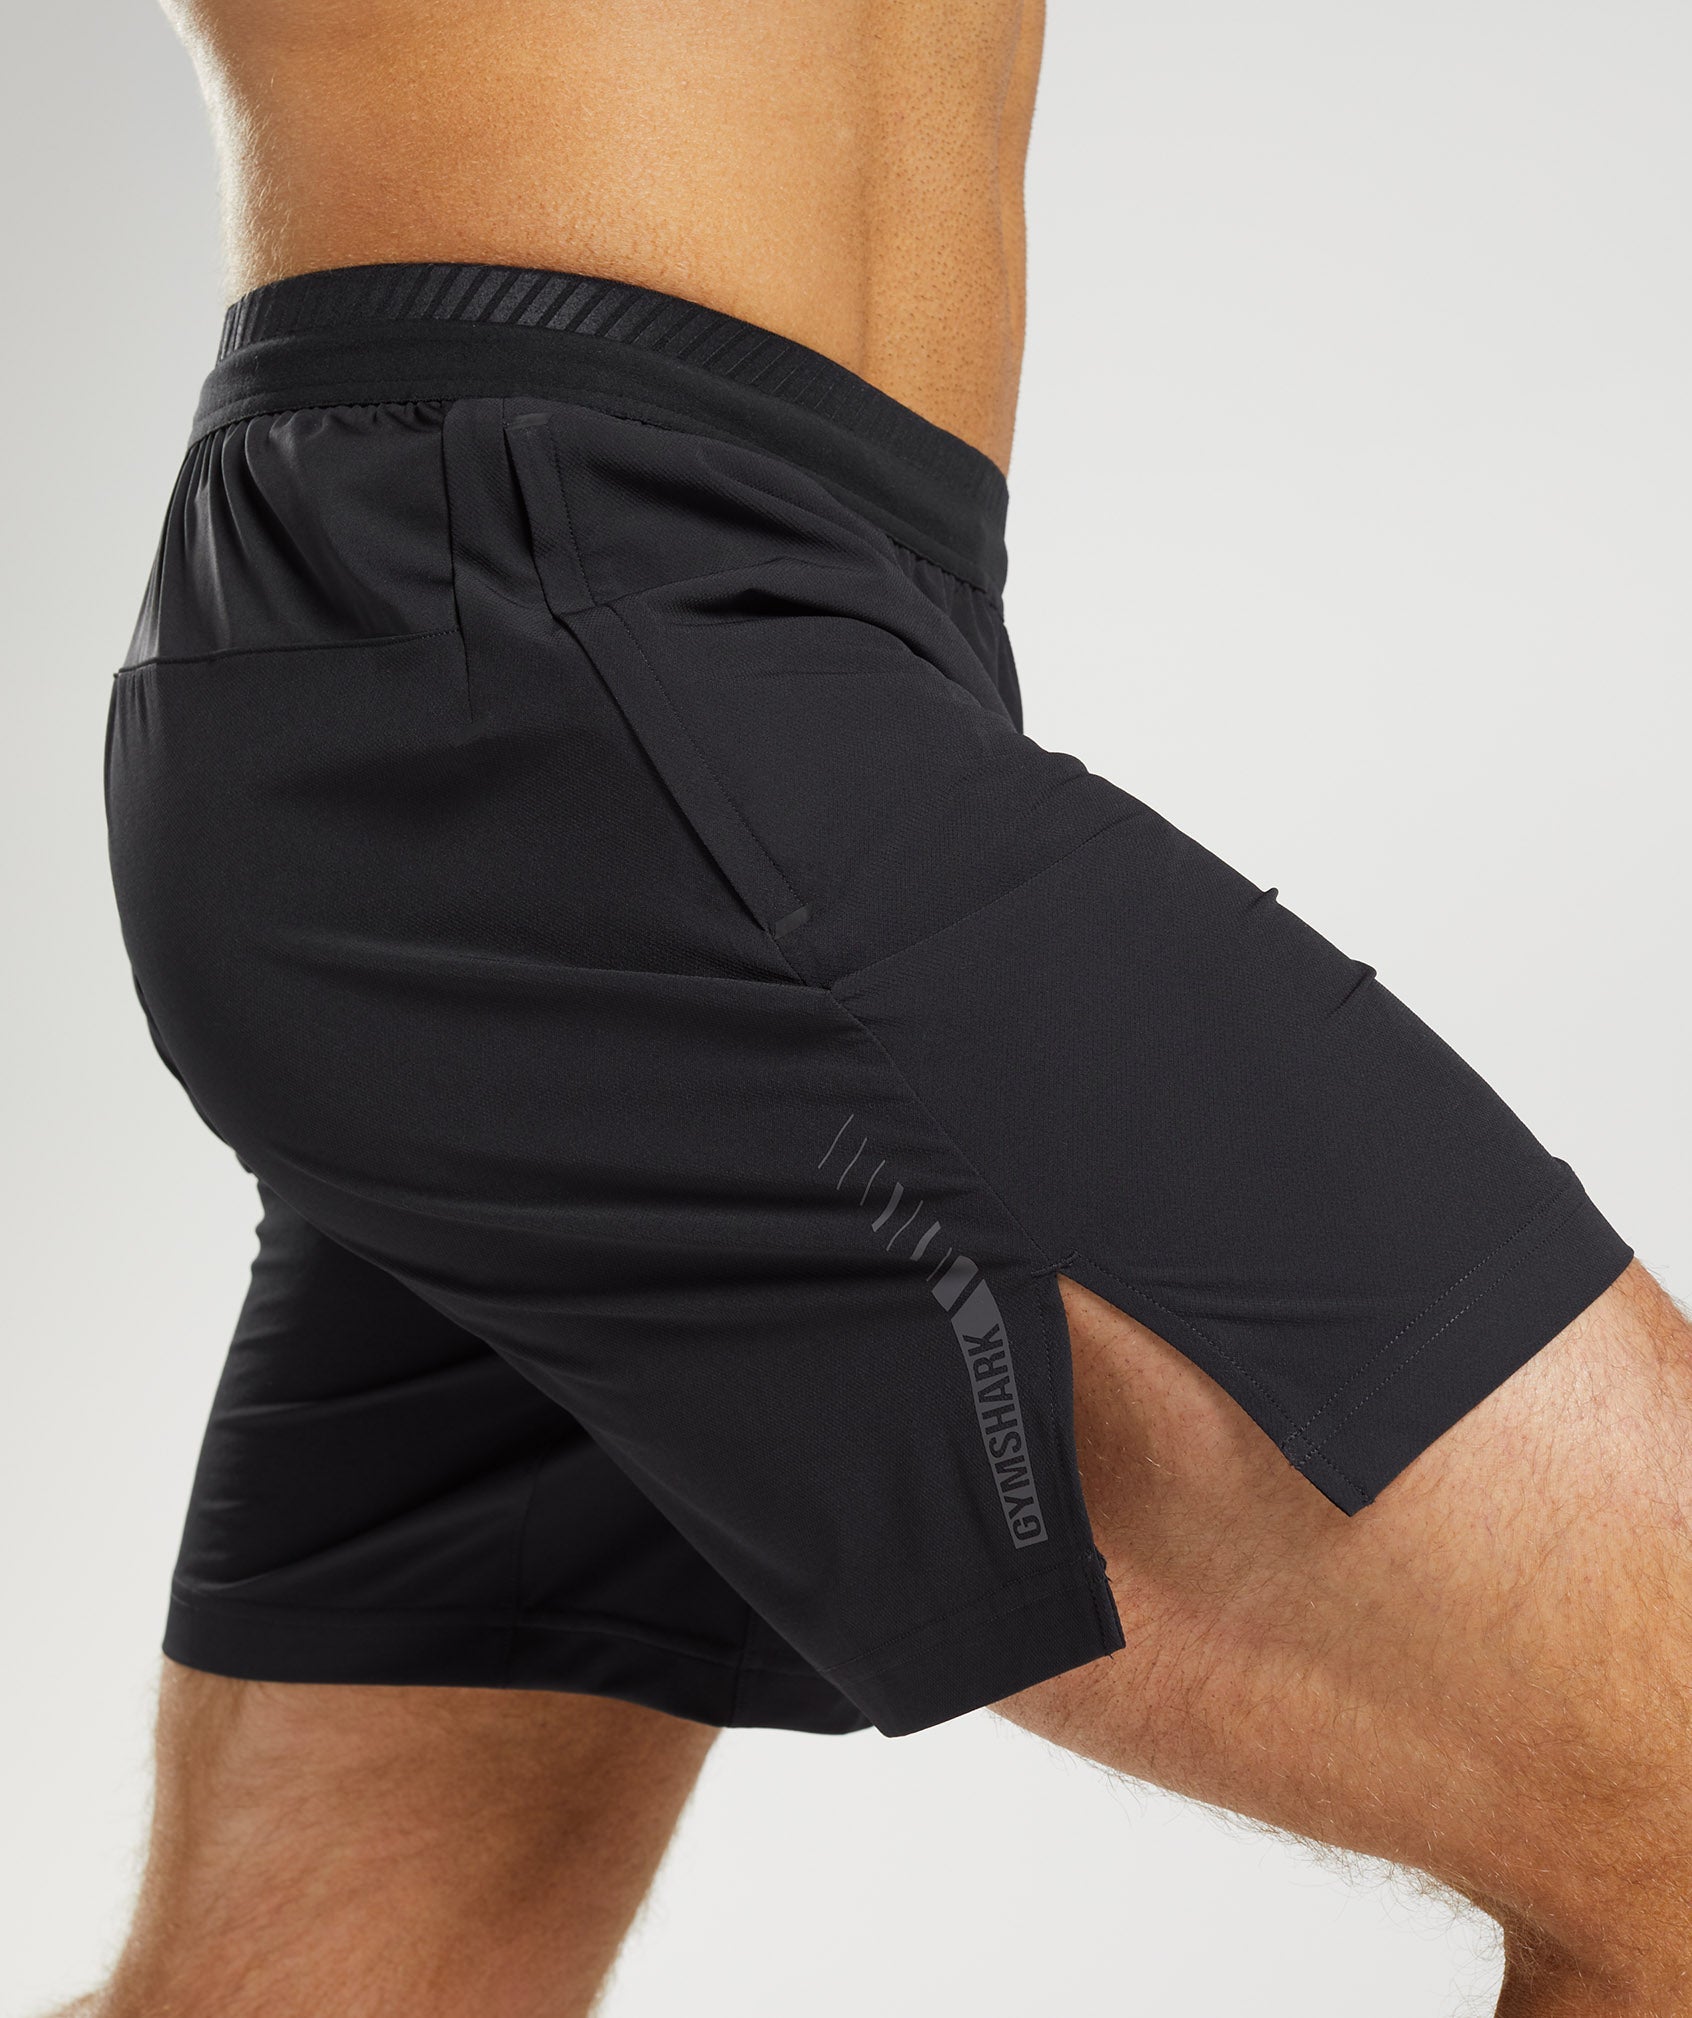 Apex 7" Hybrid Shorts in Black - view 6